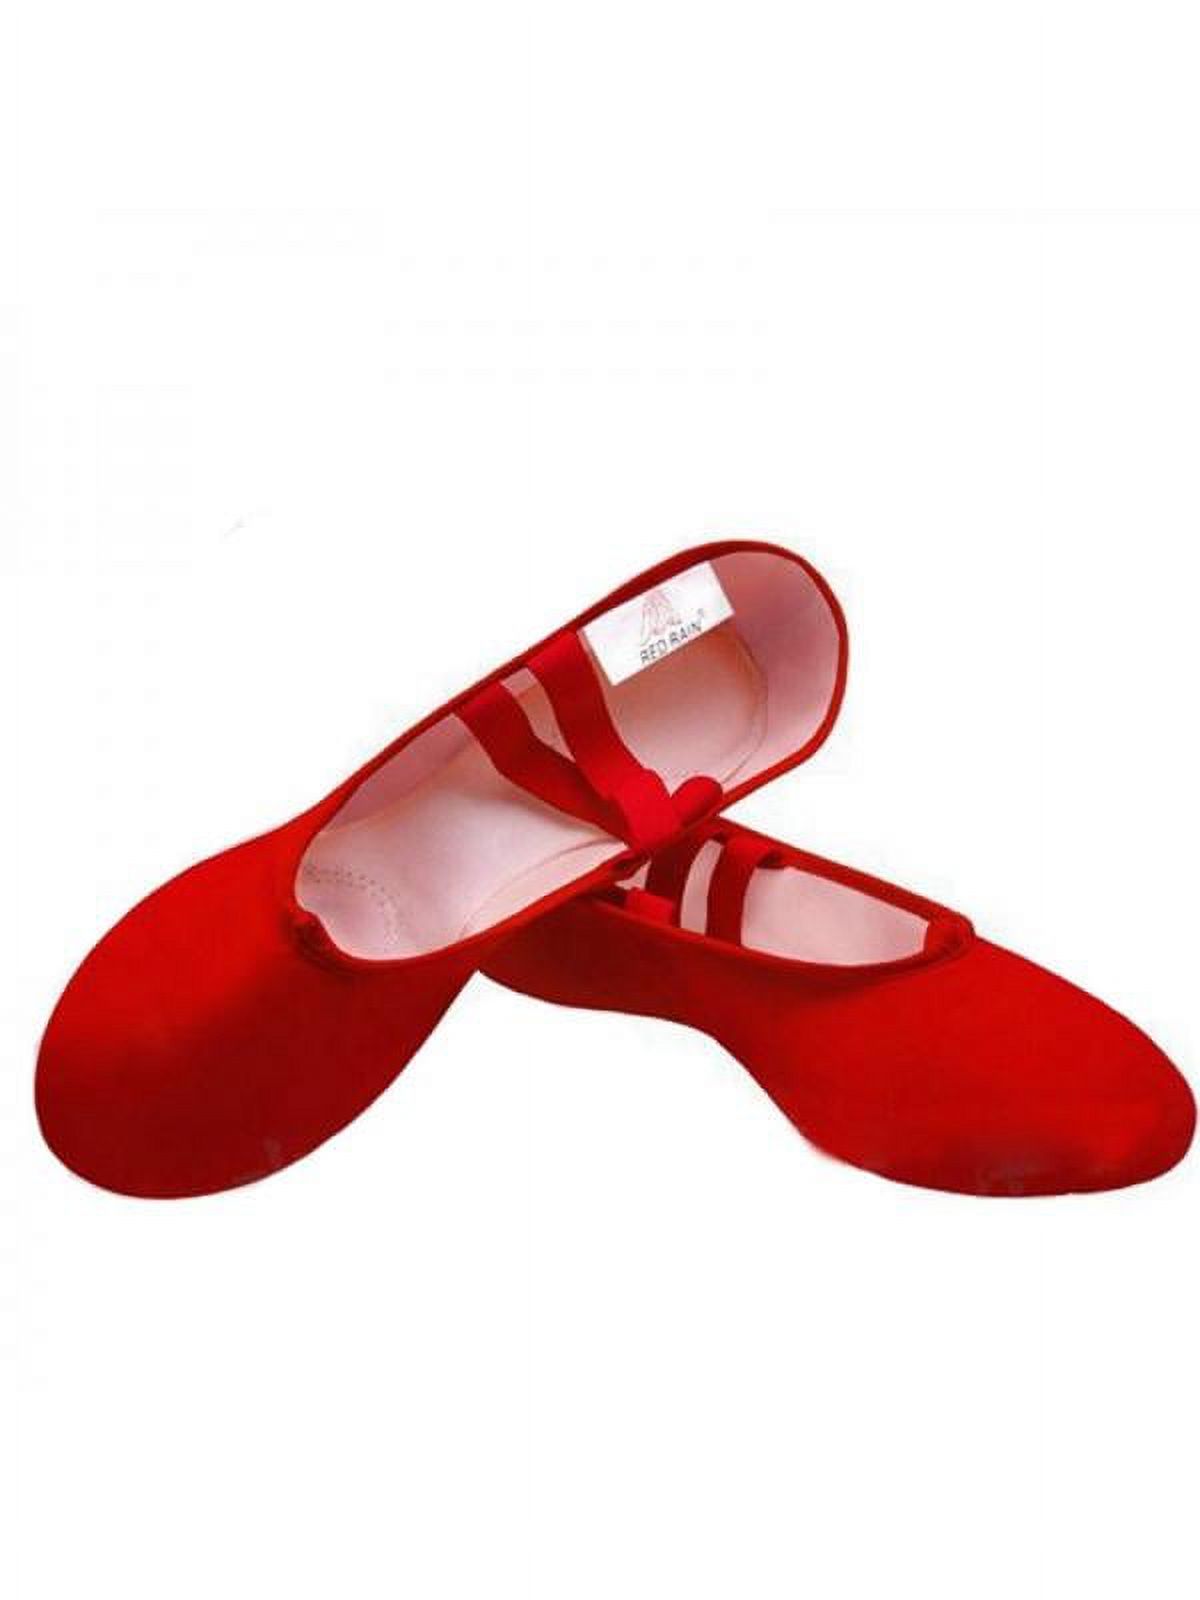 Children Adults Canvas Ballet Dance Shoes Split Sole Pointe Slippers Dancing Shoes - image 1 of 2